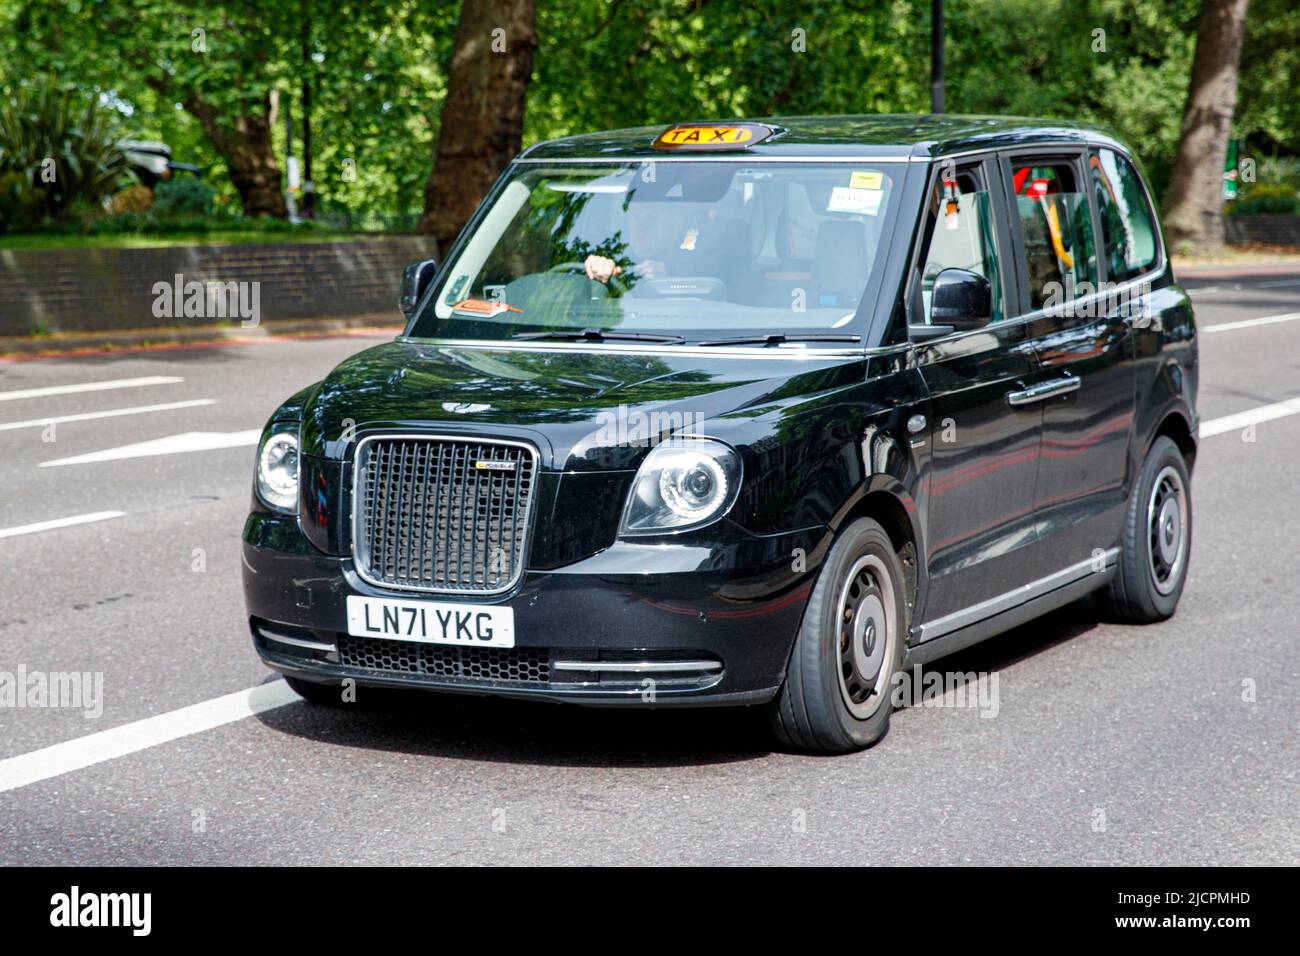 London black taxi cab in London, England, United Kingdom on Wednesday, May 18, 2022.Photo: David Rowland / One-Image.com Stock Photo